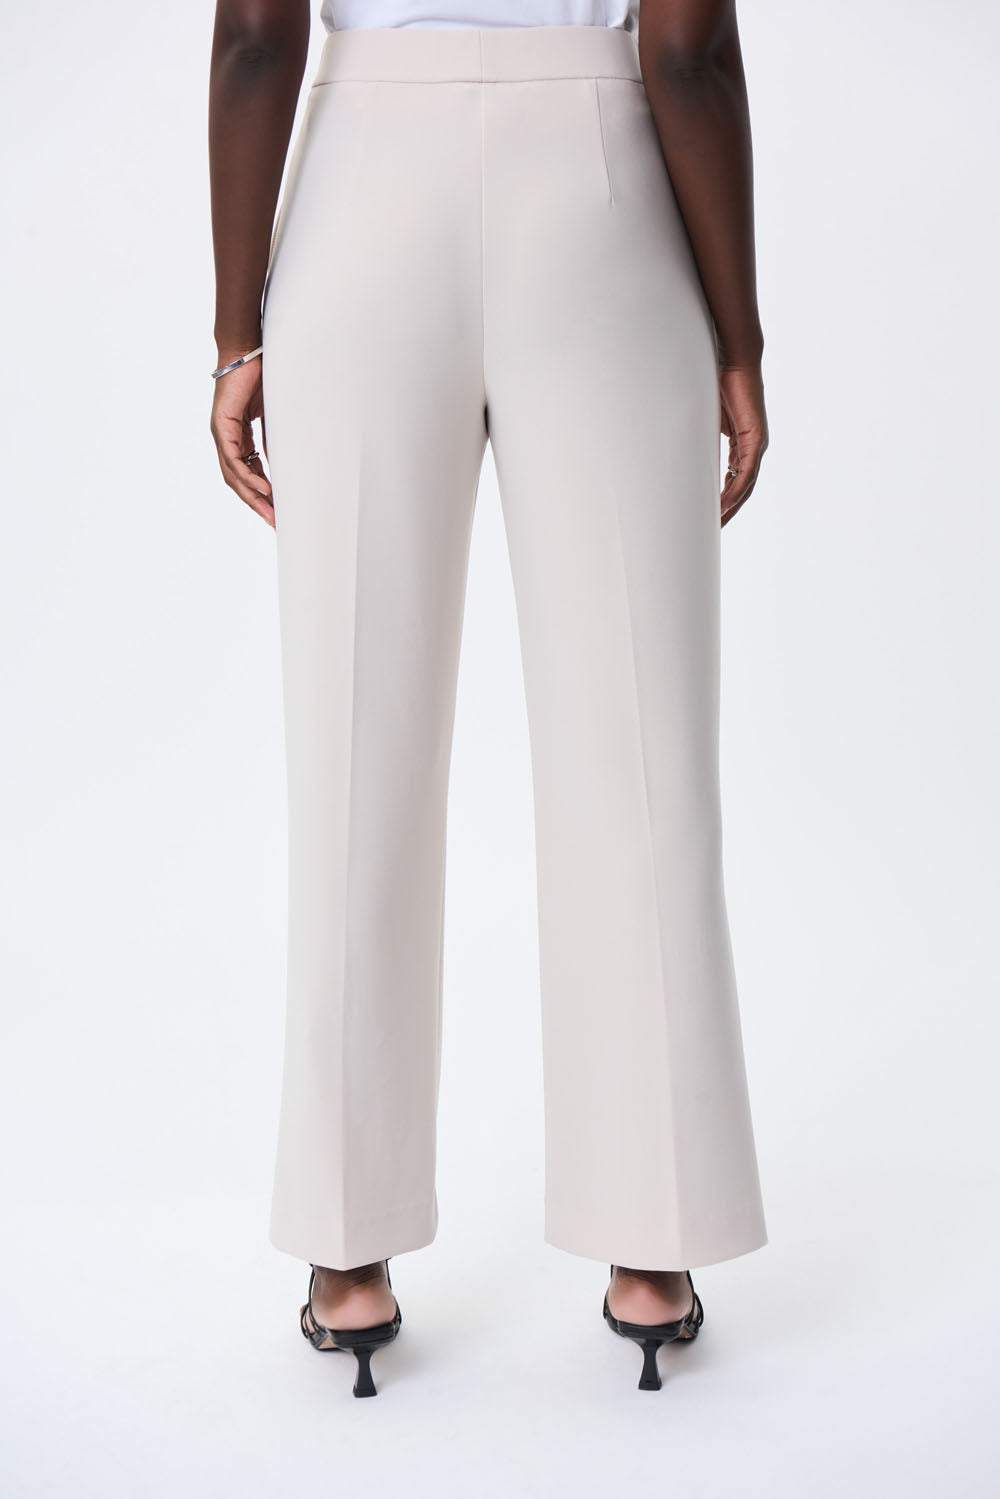 Joseph Ribkoff Moonstone Pants Style 231136 – Luxetire